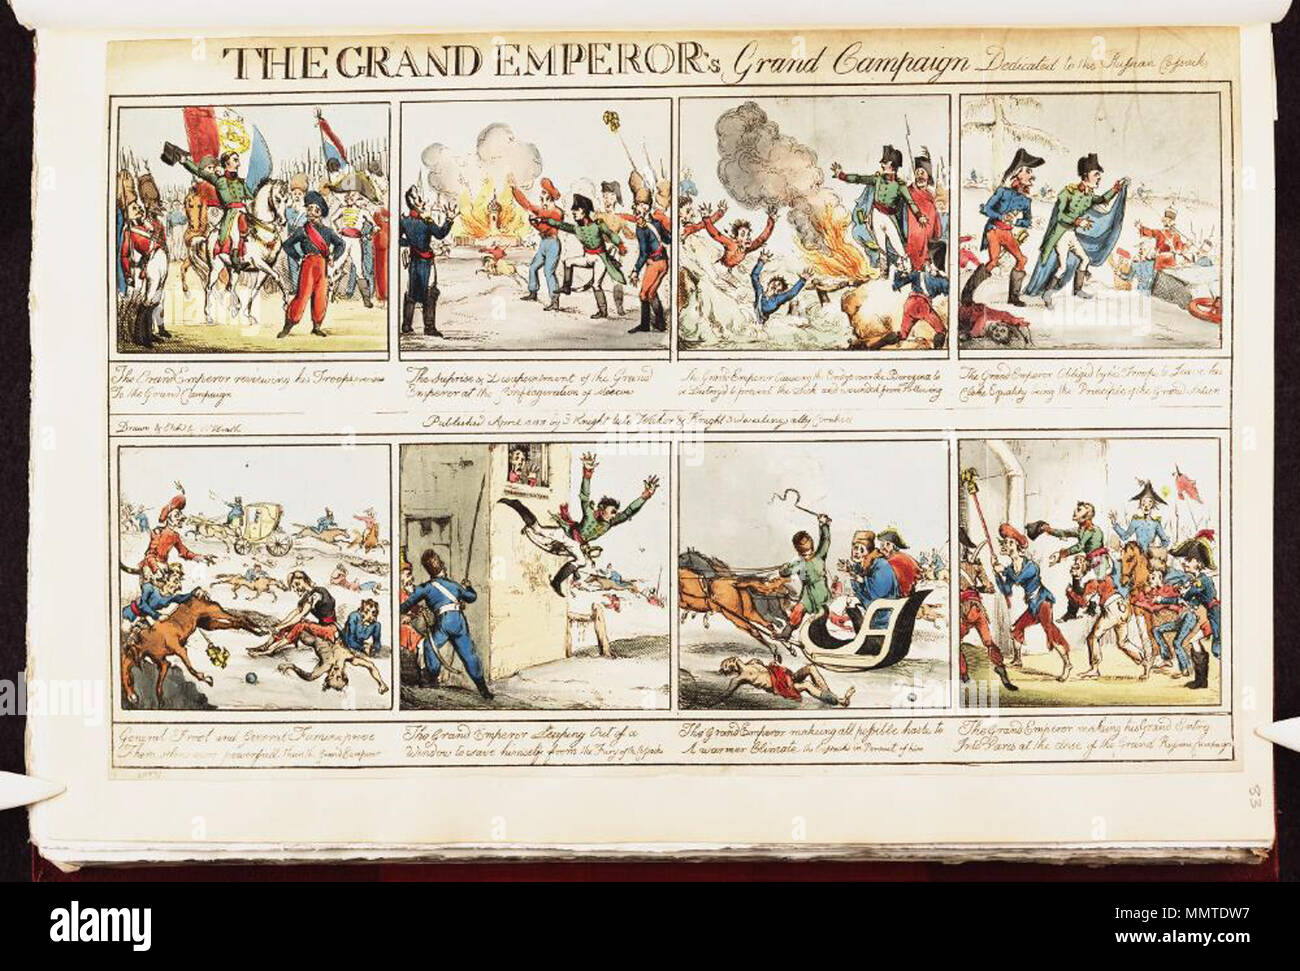 . La satire de la campagne de Russie de Napoléon. (La caricature politique) Le grand Emperor's campagne grande. 18 avril 1813. Les bibliothèques Bodleian, la grande campagne de l'empereur grand Banque D'Images